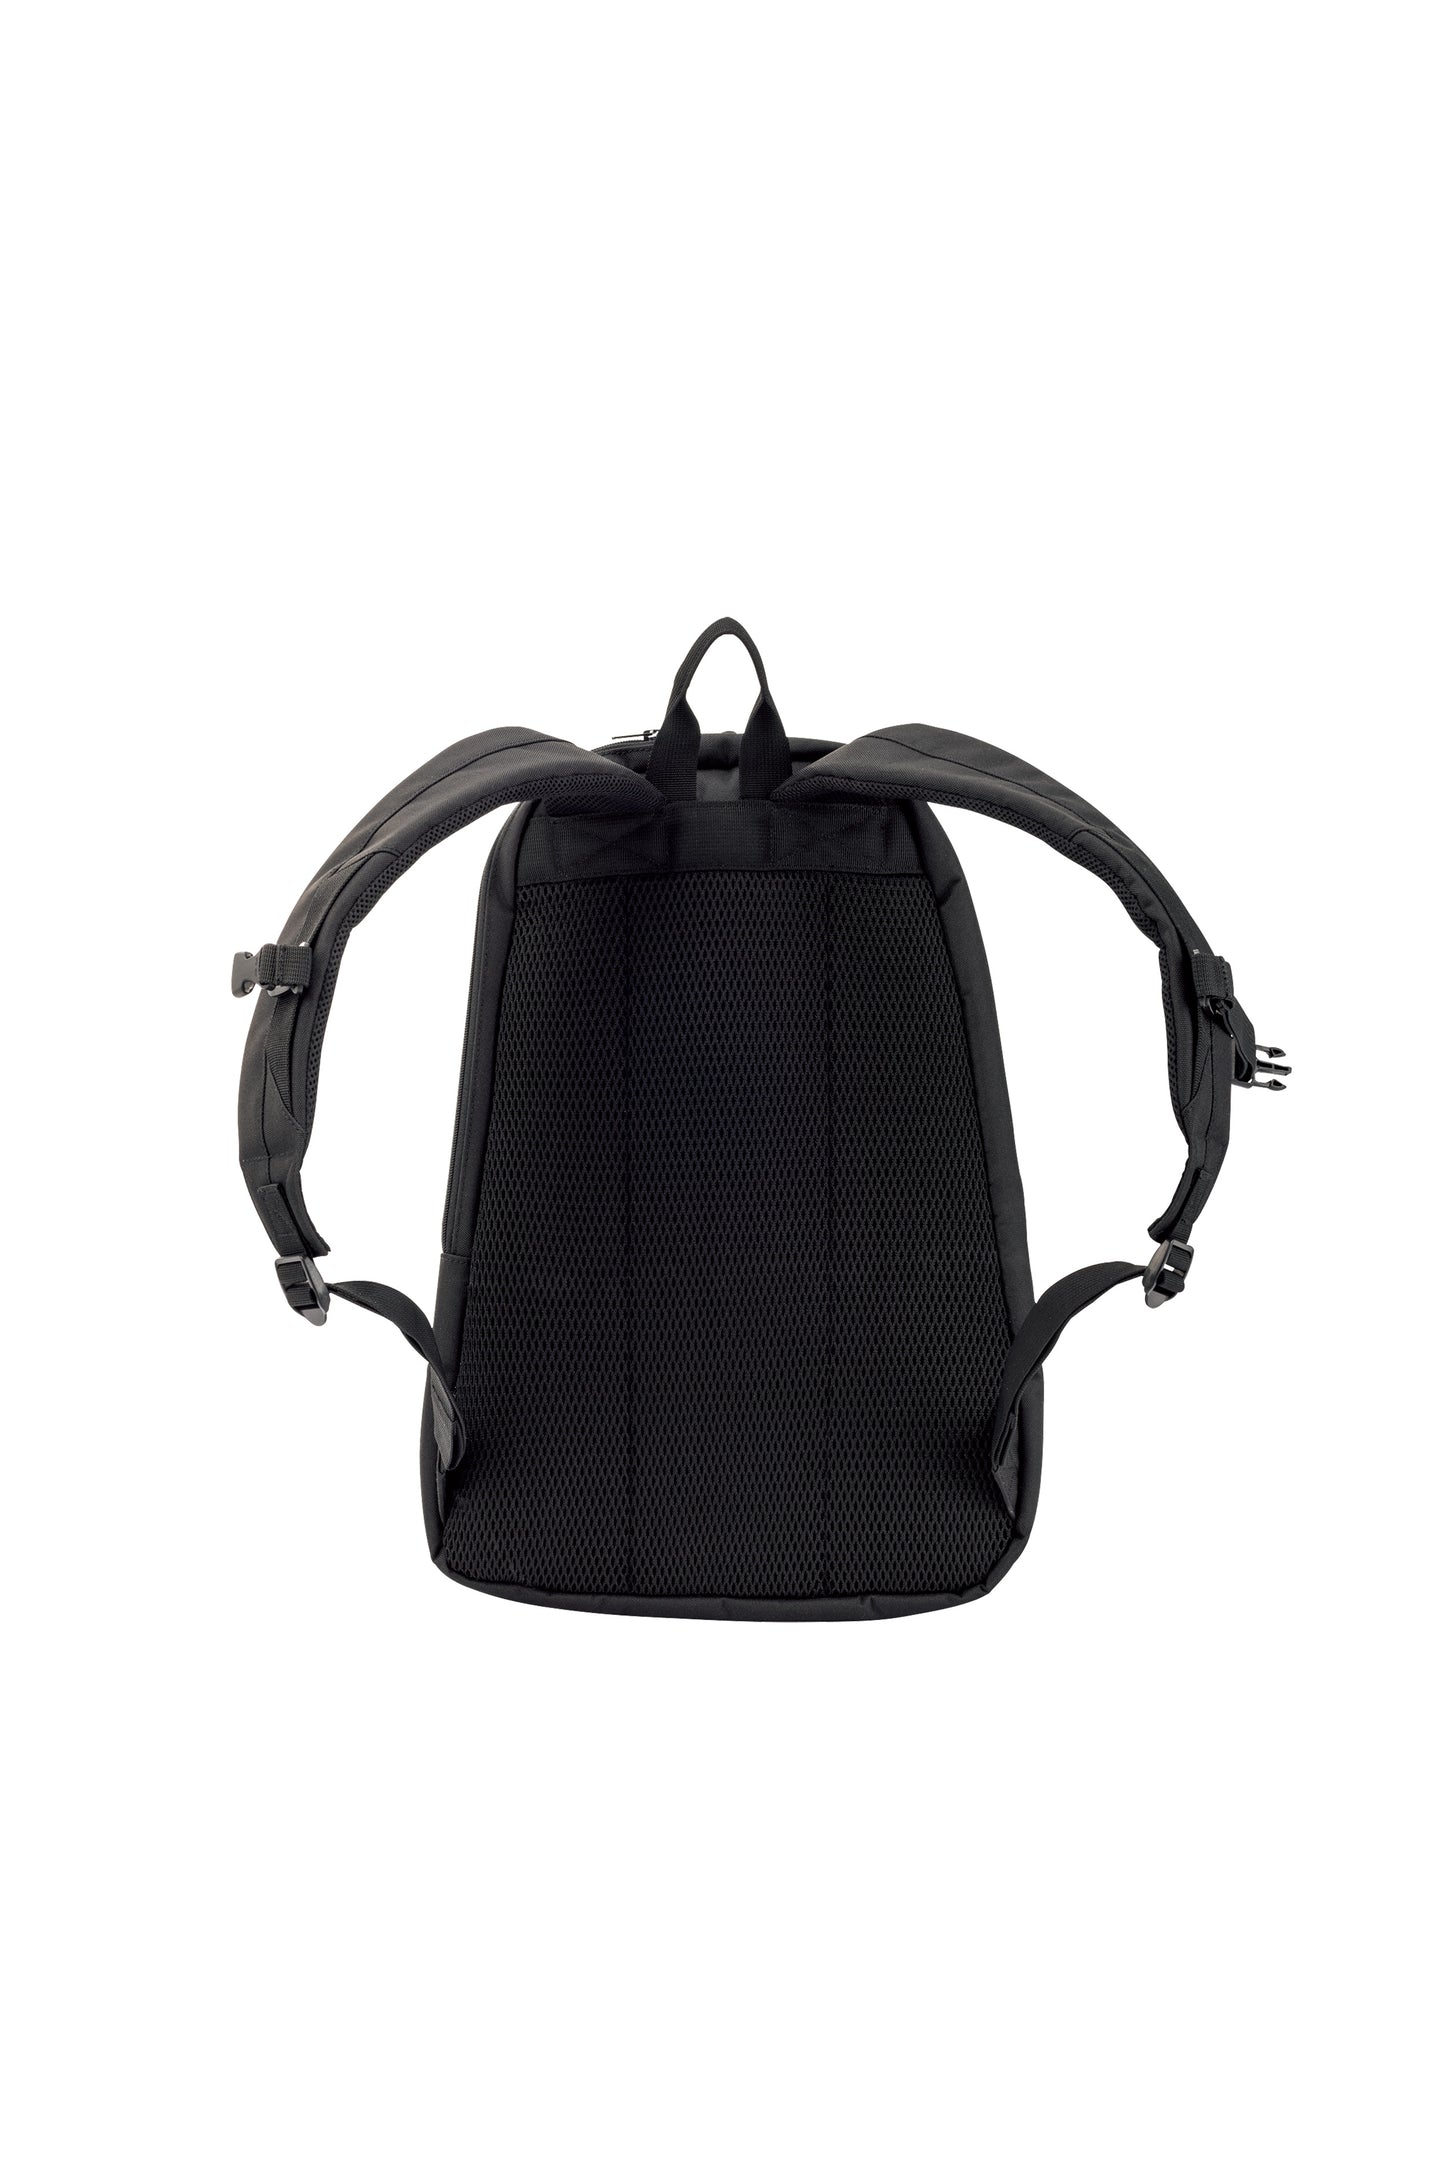 Yonex Pro Series Fine Blue backpack tennis badminton bag